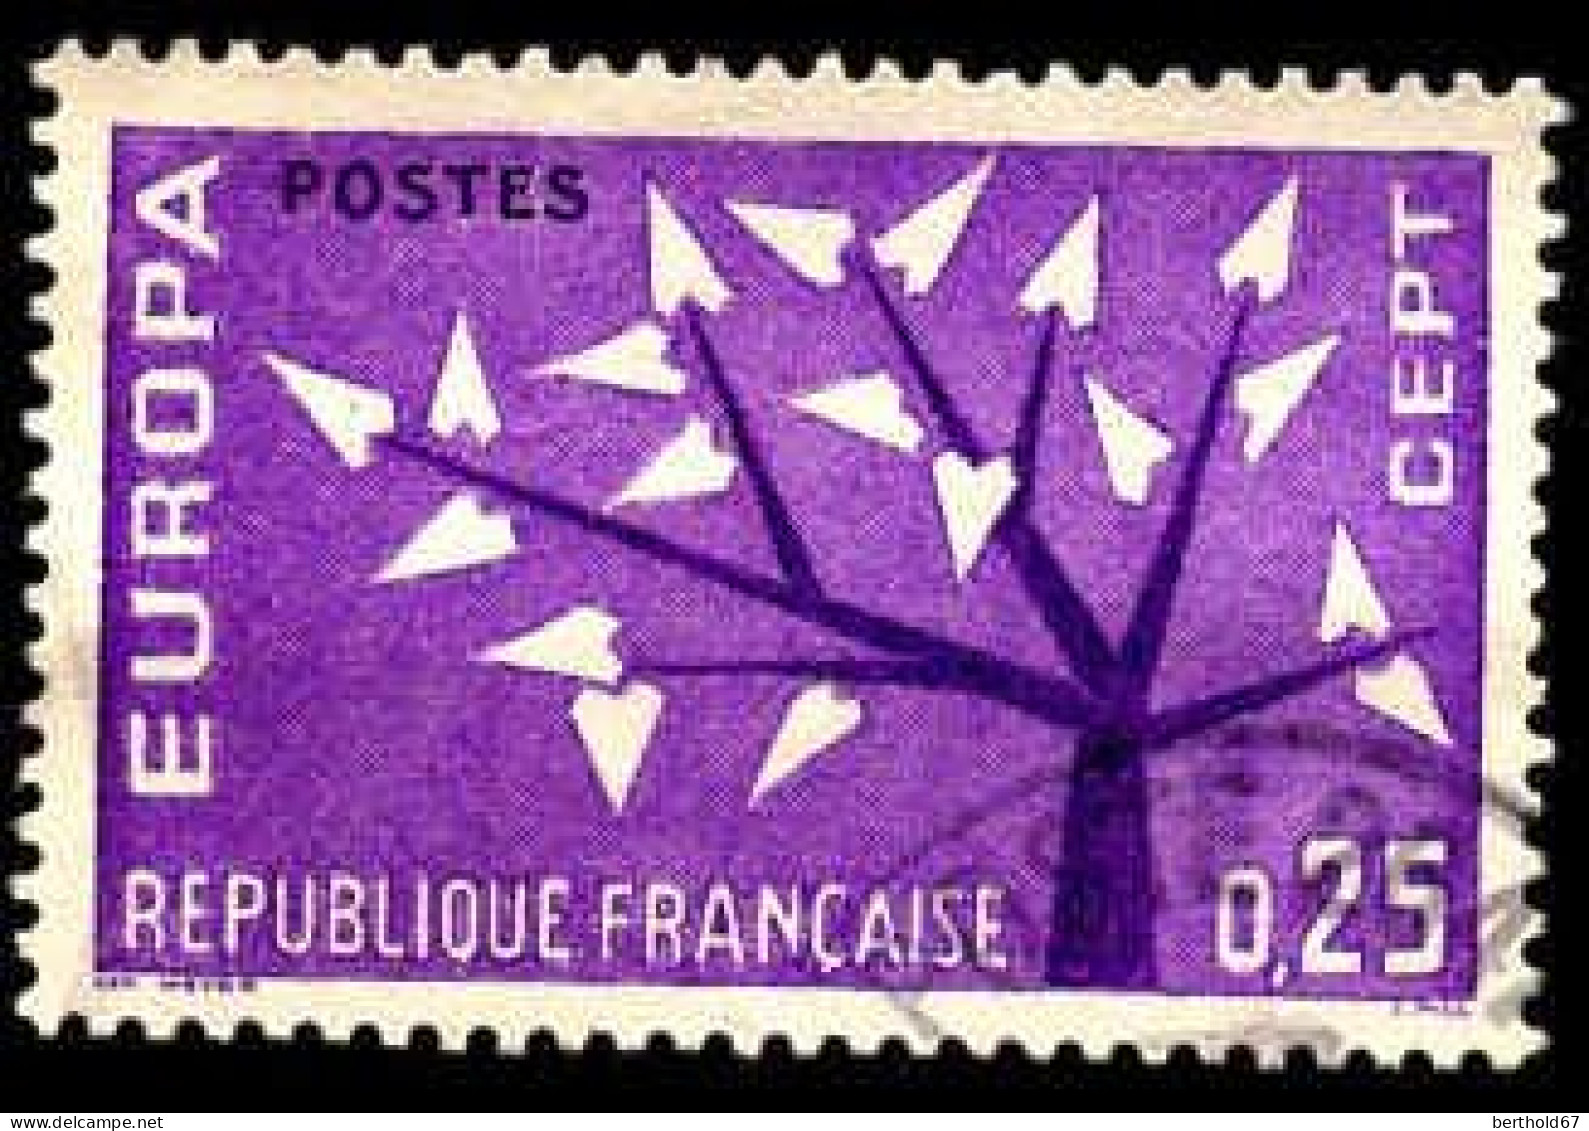 France Poste Obl Yv:1358 Mi:1411 Europa Cept Arbre à 19 Feuilles (Beau Cachet Rond) - Gebruikt